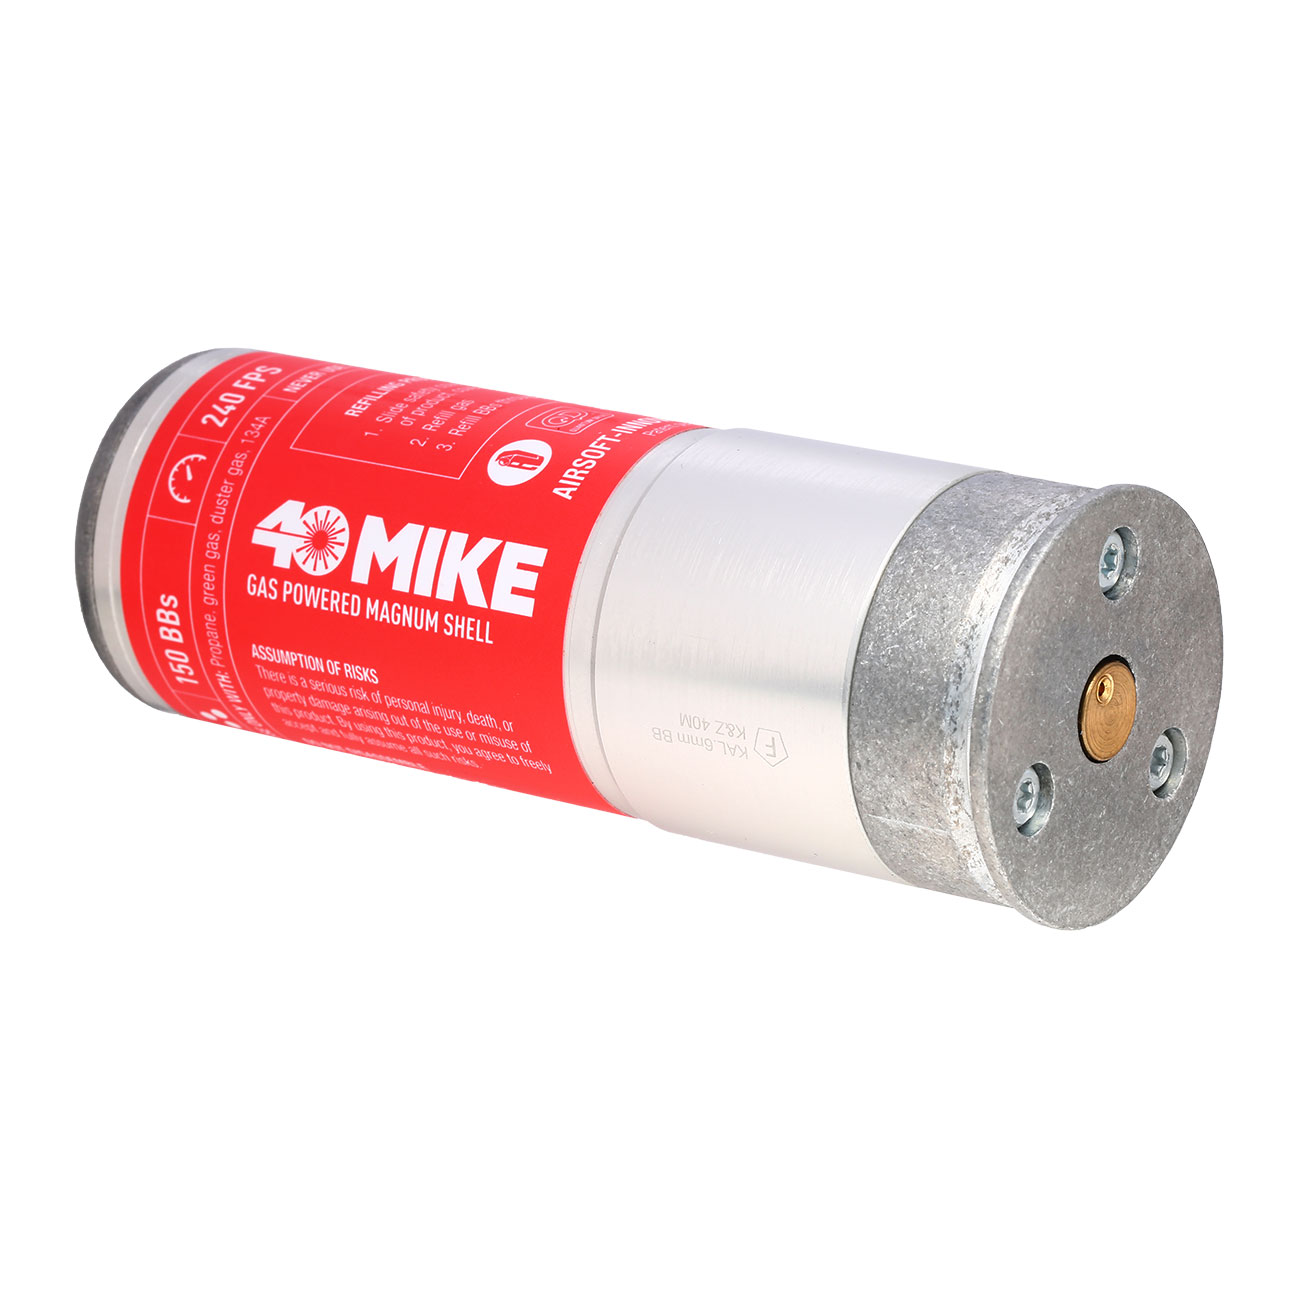 Airsoft Innovations 40 Mike 40mm Vollmetall Hülse / Einlegepatrone f. 150 6mm BBs rot / silber Bild 2